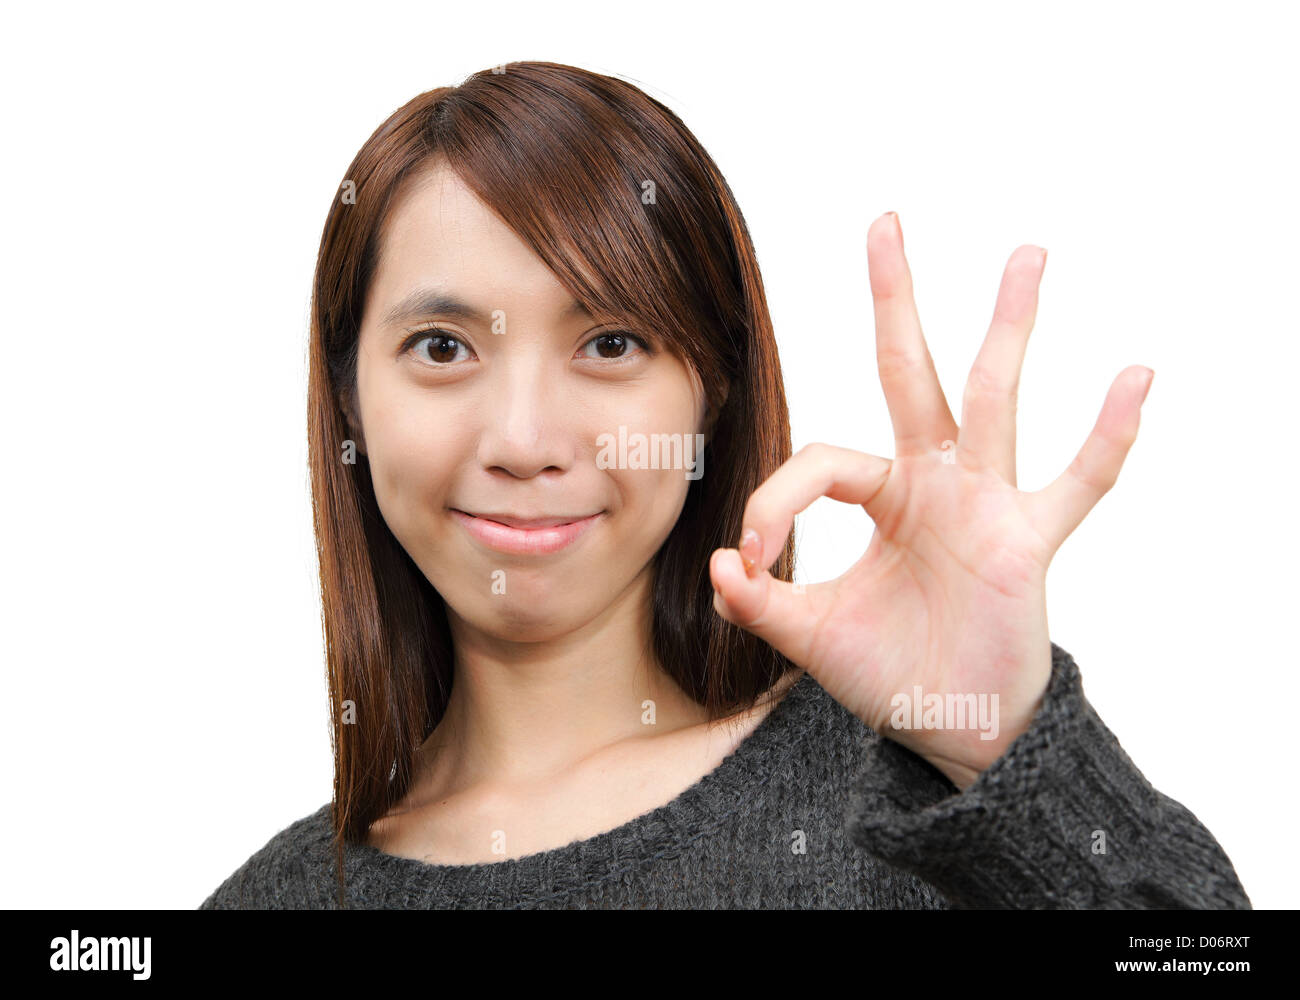 woman show ok sign Stock Photo - Alamy